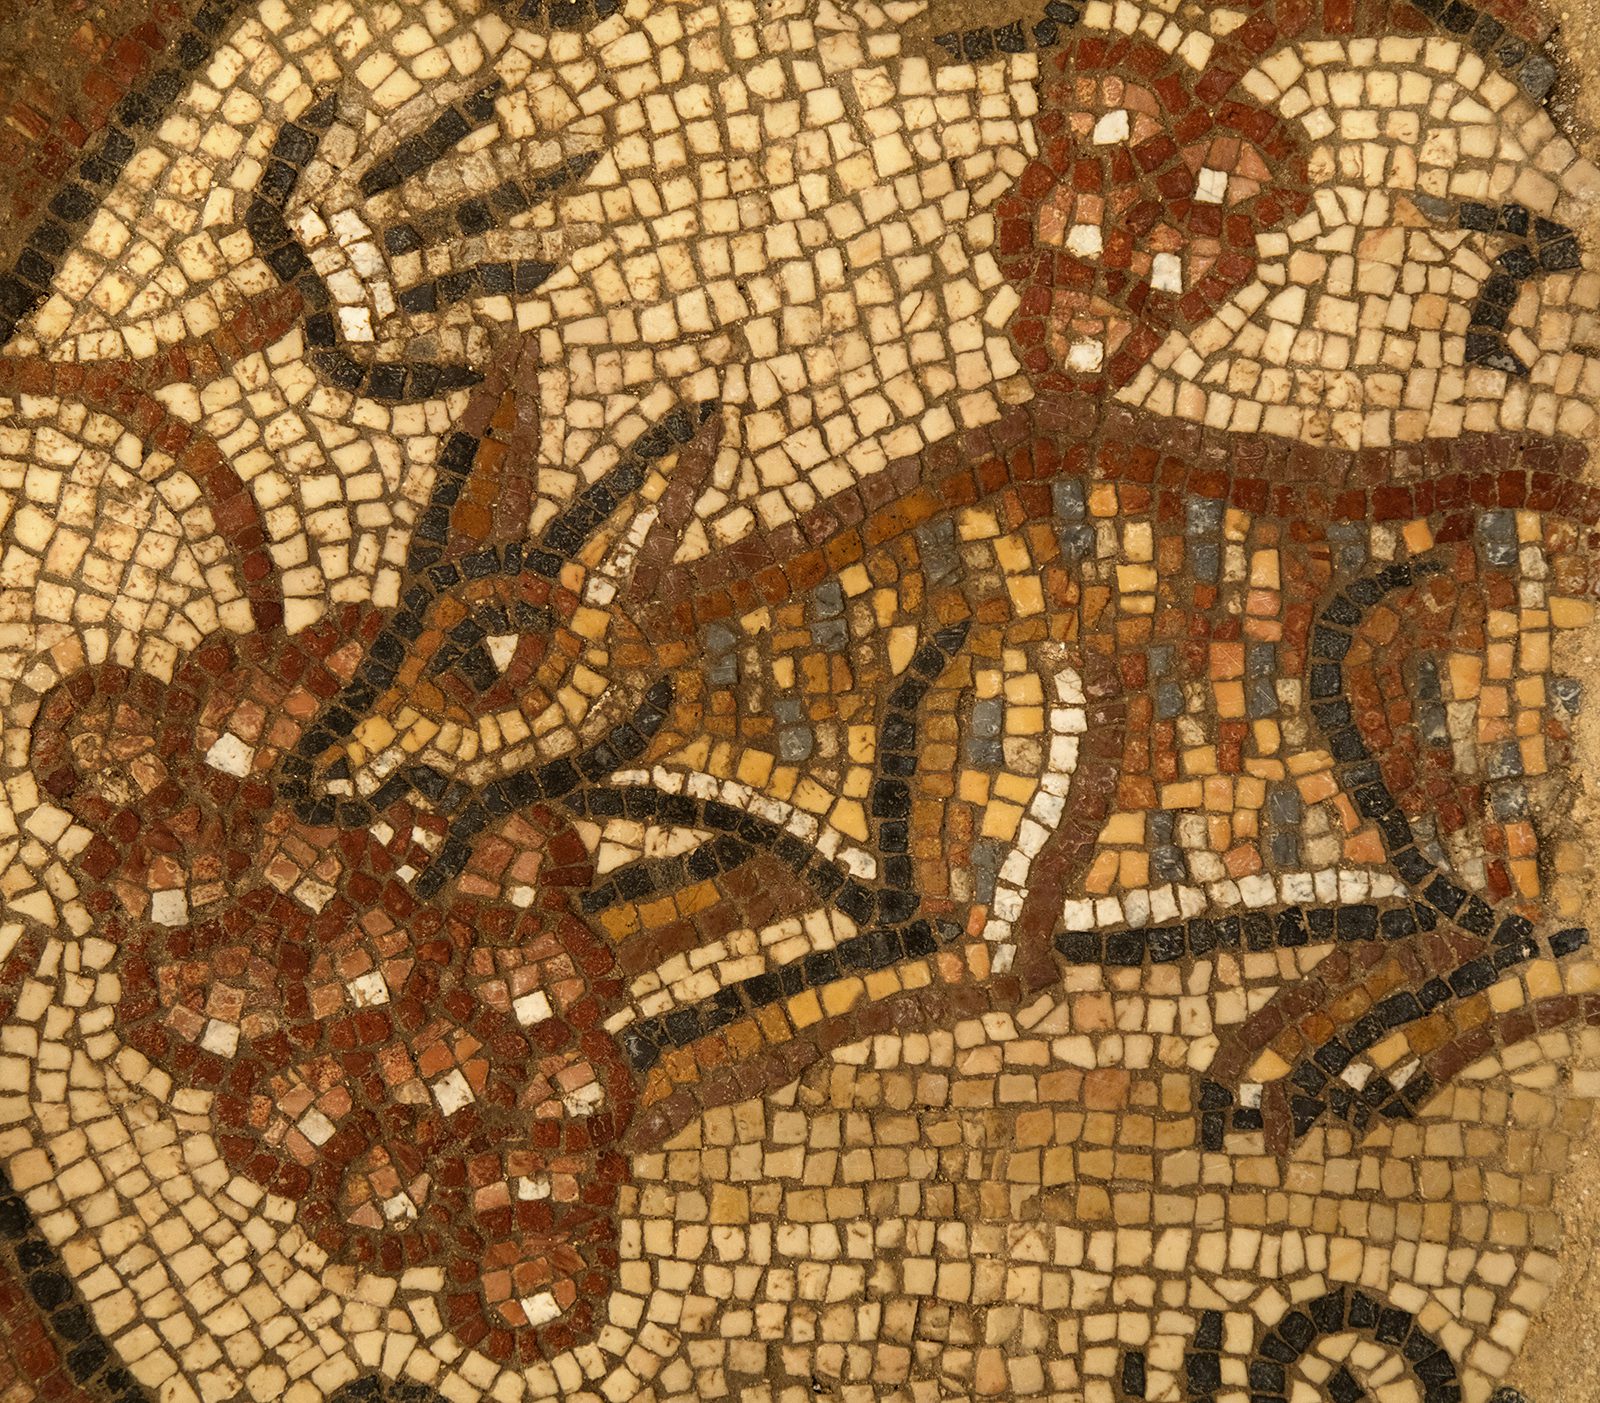 A 1600-year-old mosaic depicting a fox eating grapes in the ancient synagogue at Huqoq, Israel. Photo © Jim Haberman